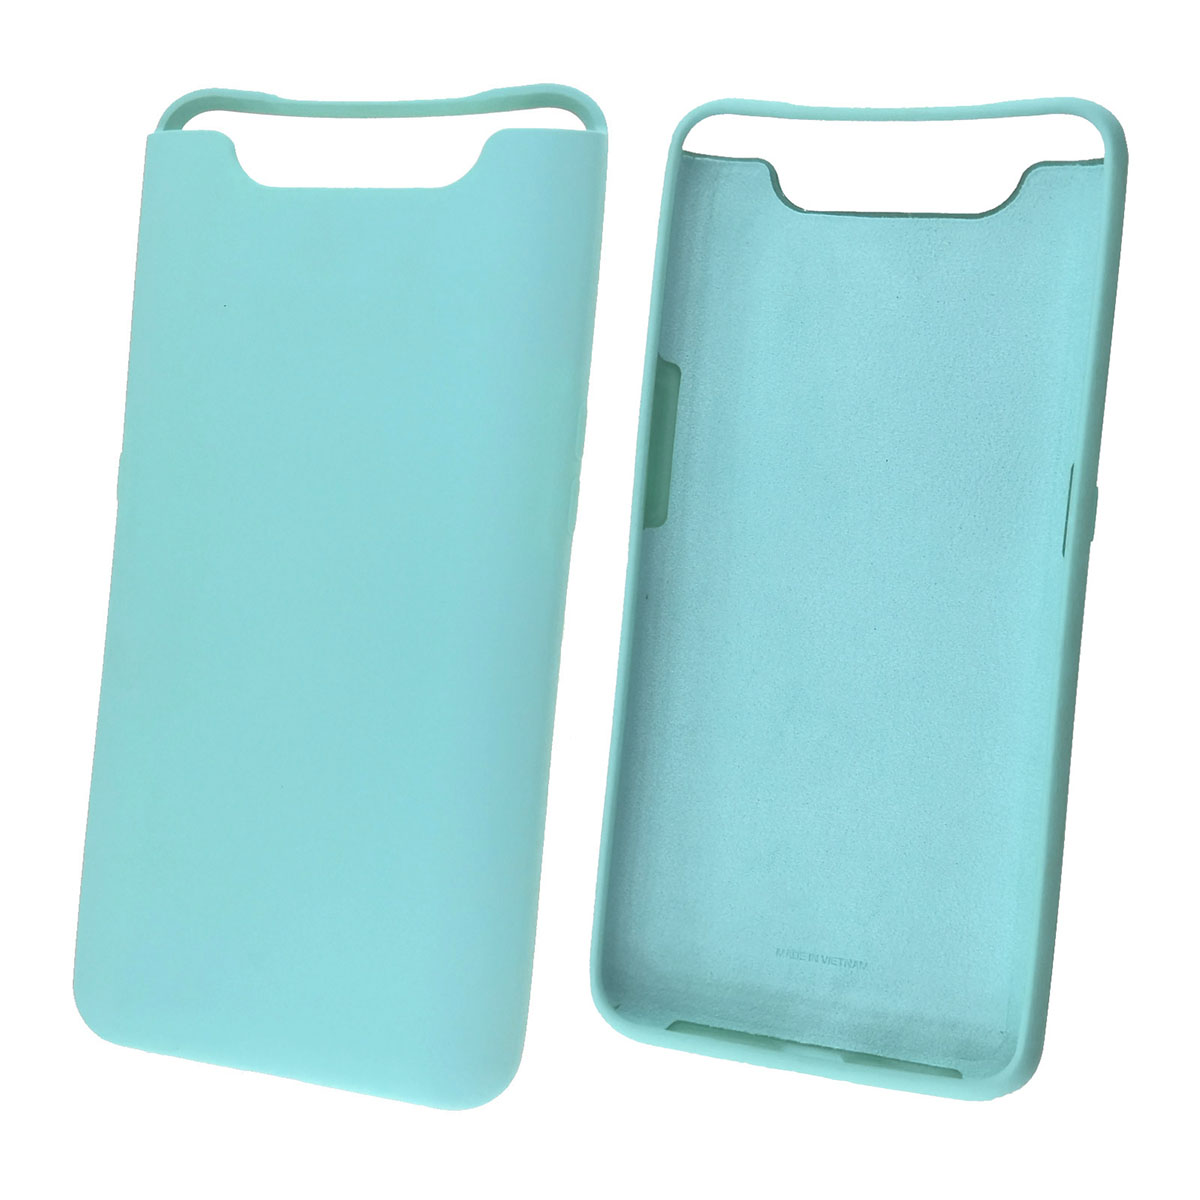 Чехол накладка Silicon Cover для Samsung A80 2019 (SM-A805), силикон, бархат, цвет бирюзовый.